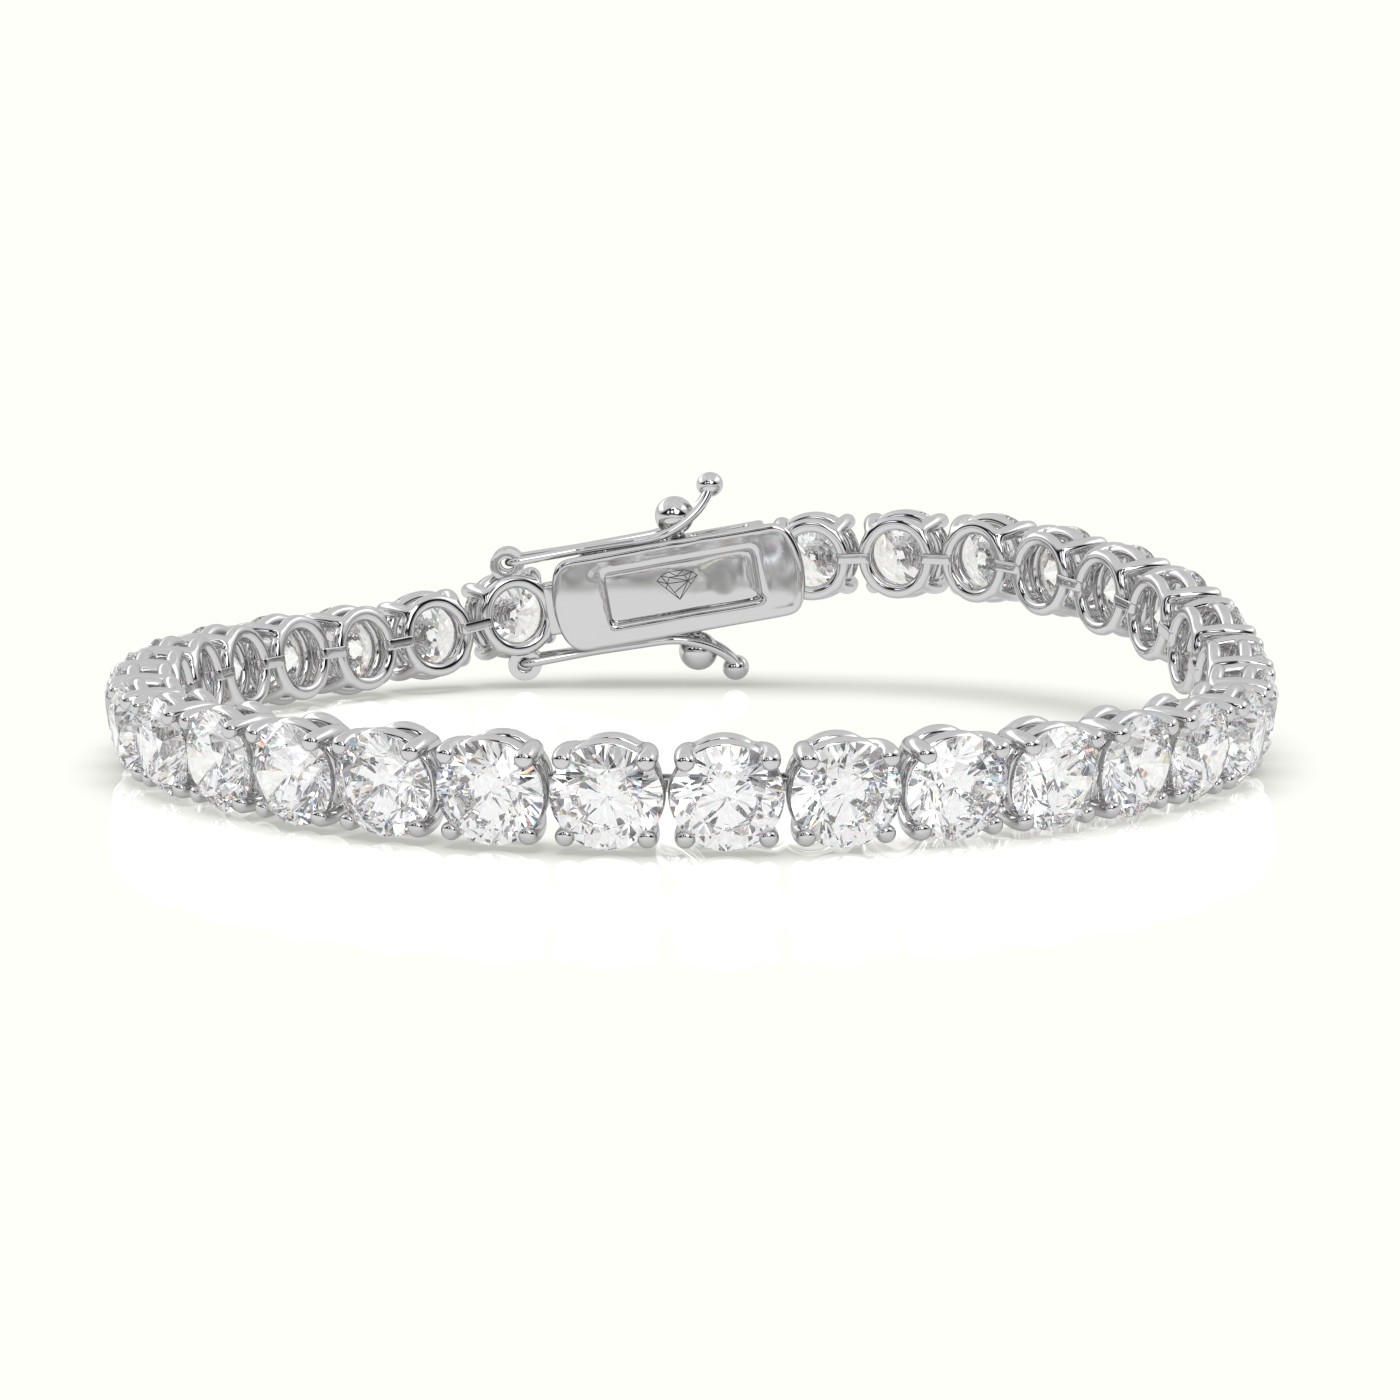 18k white gold  tennis bracelet 16.50 carat diamonds